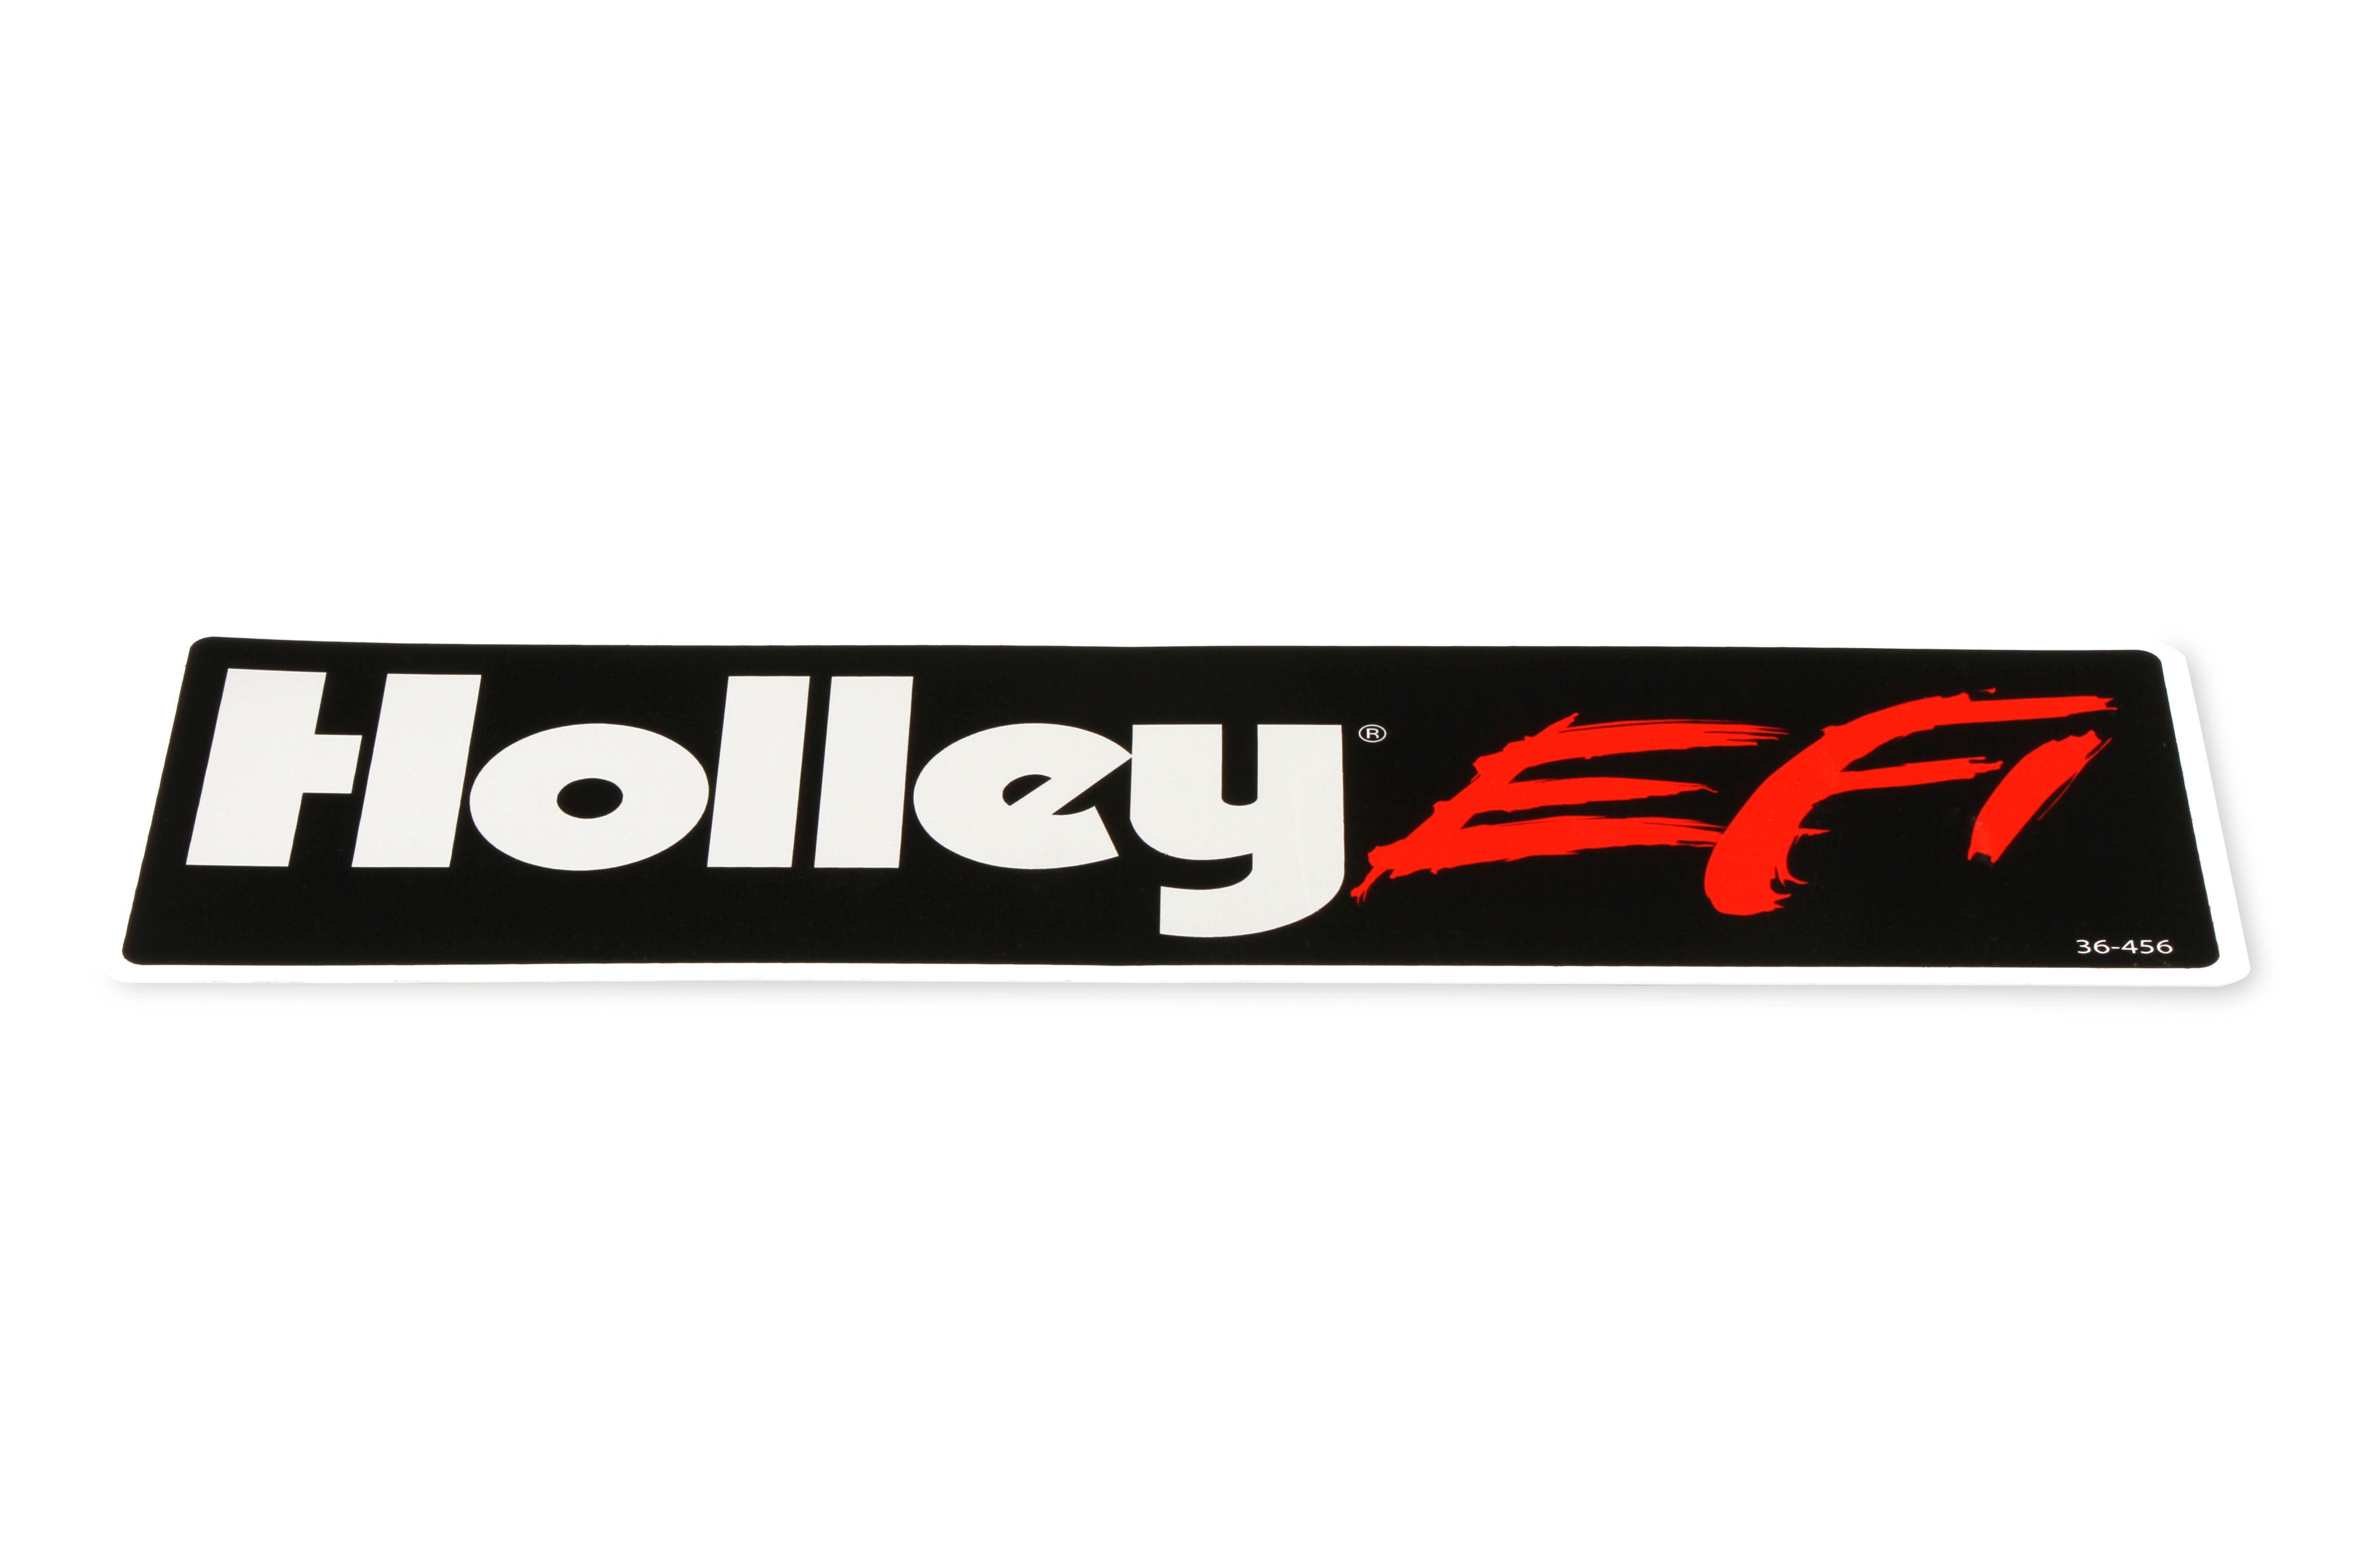 Holley EFI Exterior Decal 36-456